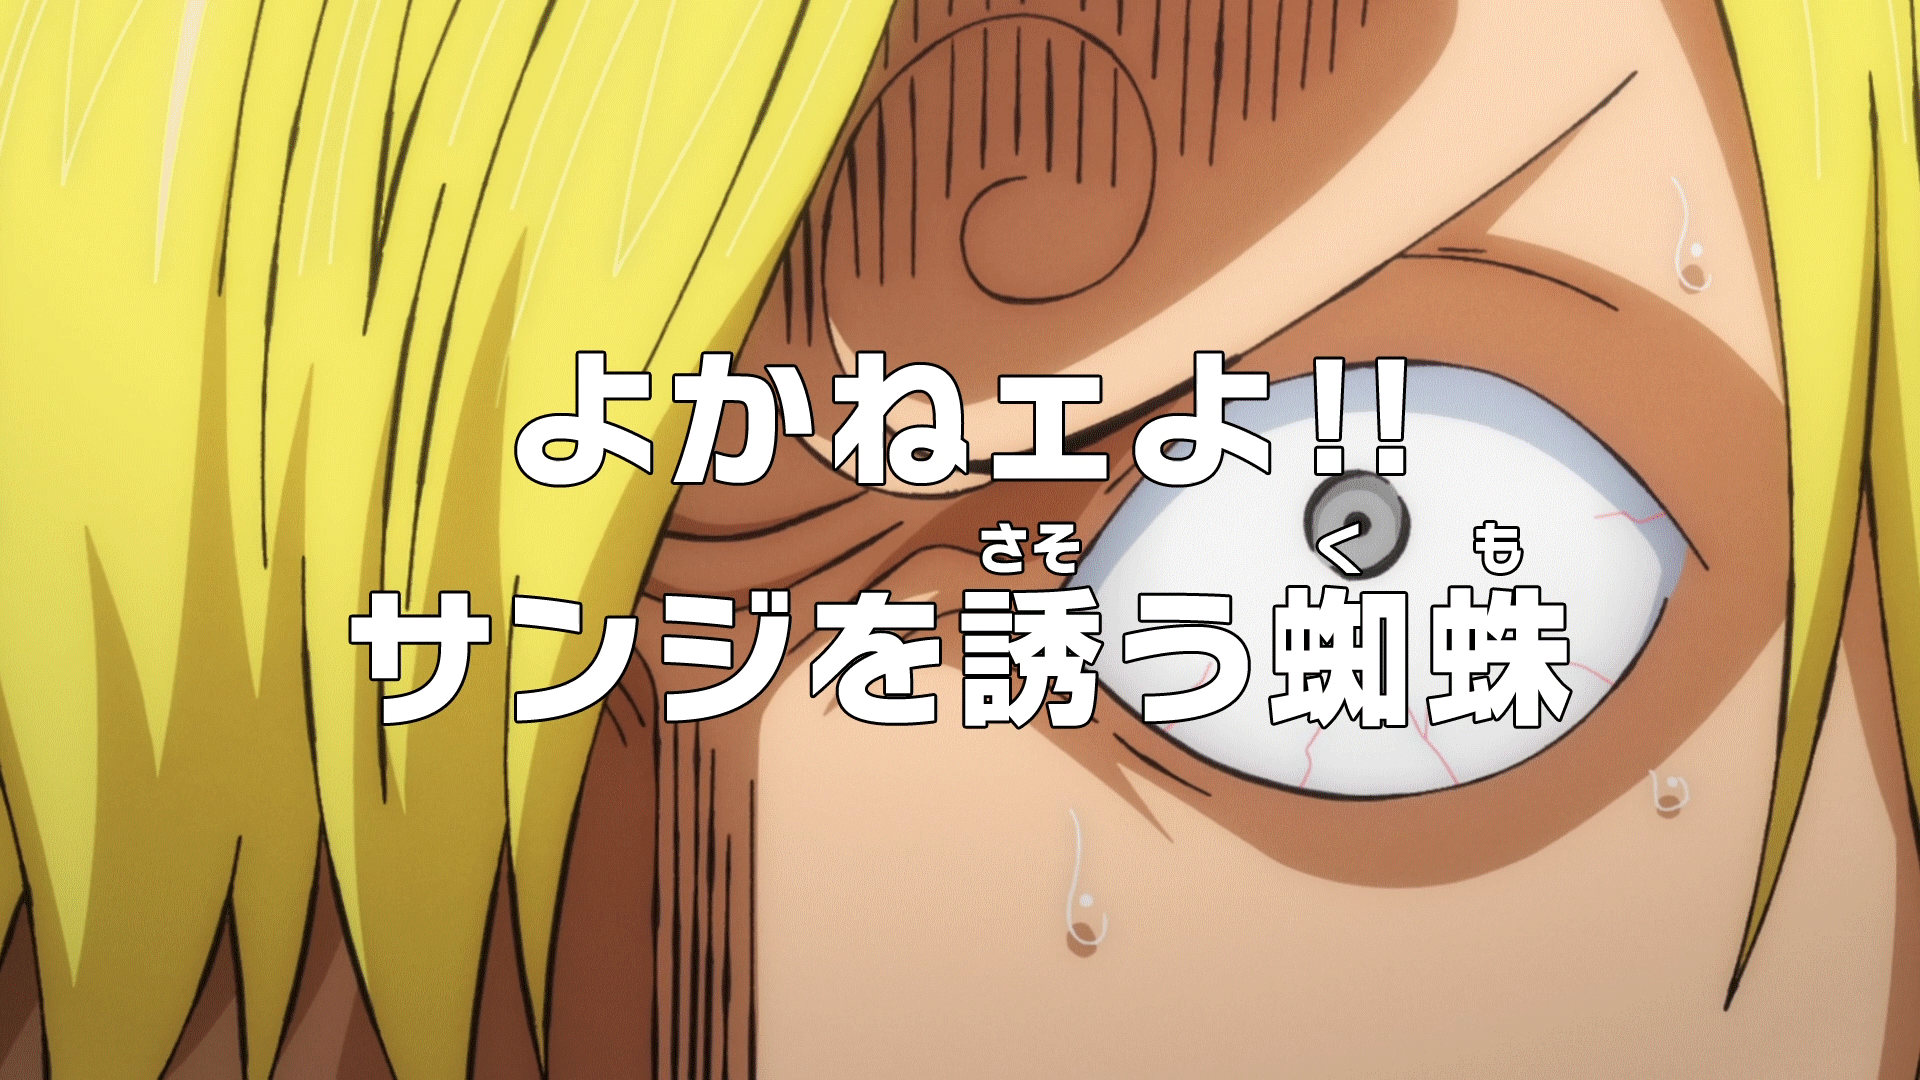 One Piece The Failing Dream? The Plot to Lure Sanji! (TV Episode 2021) -  IMDb